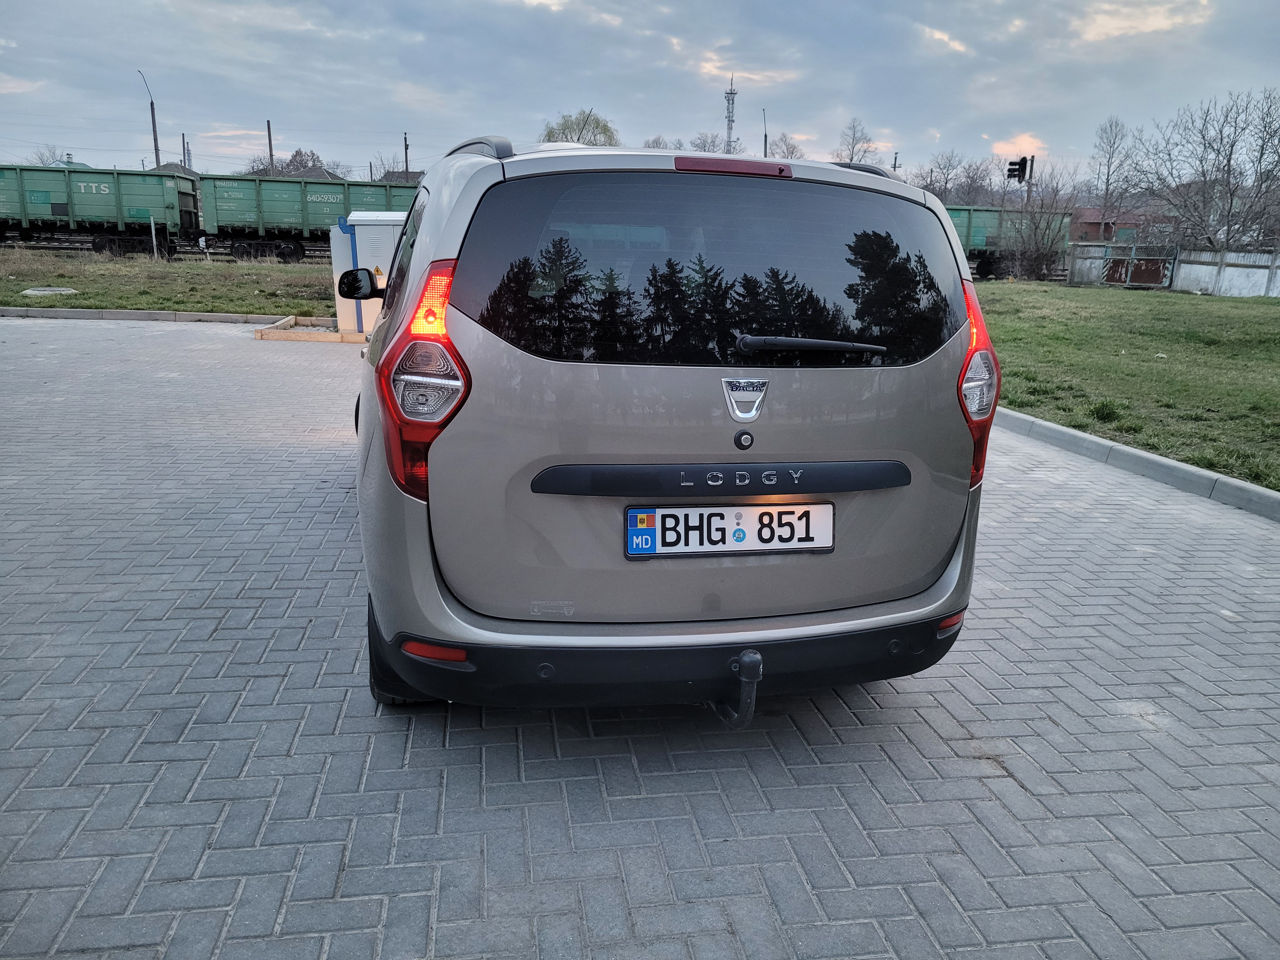 Dacia Lodgy foto 7